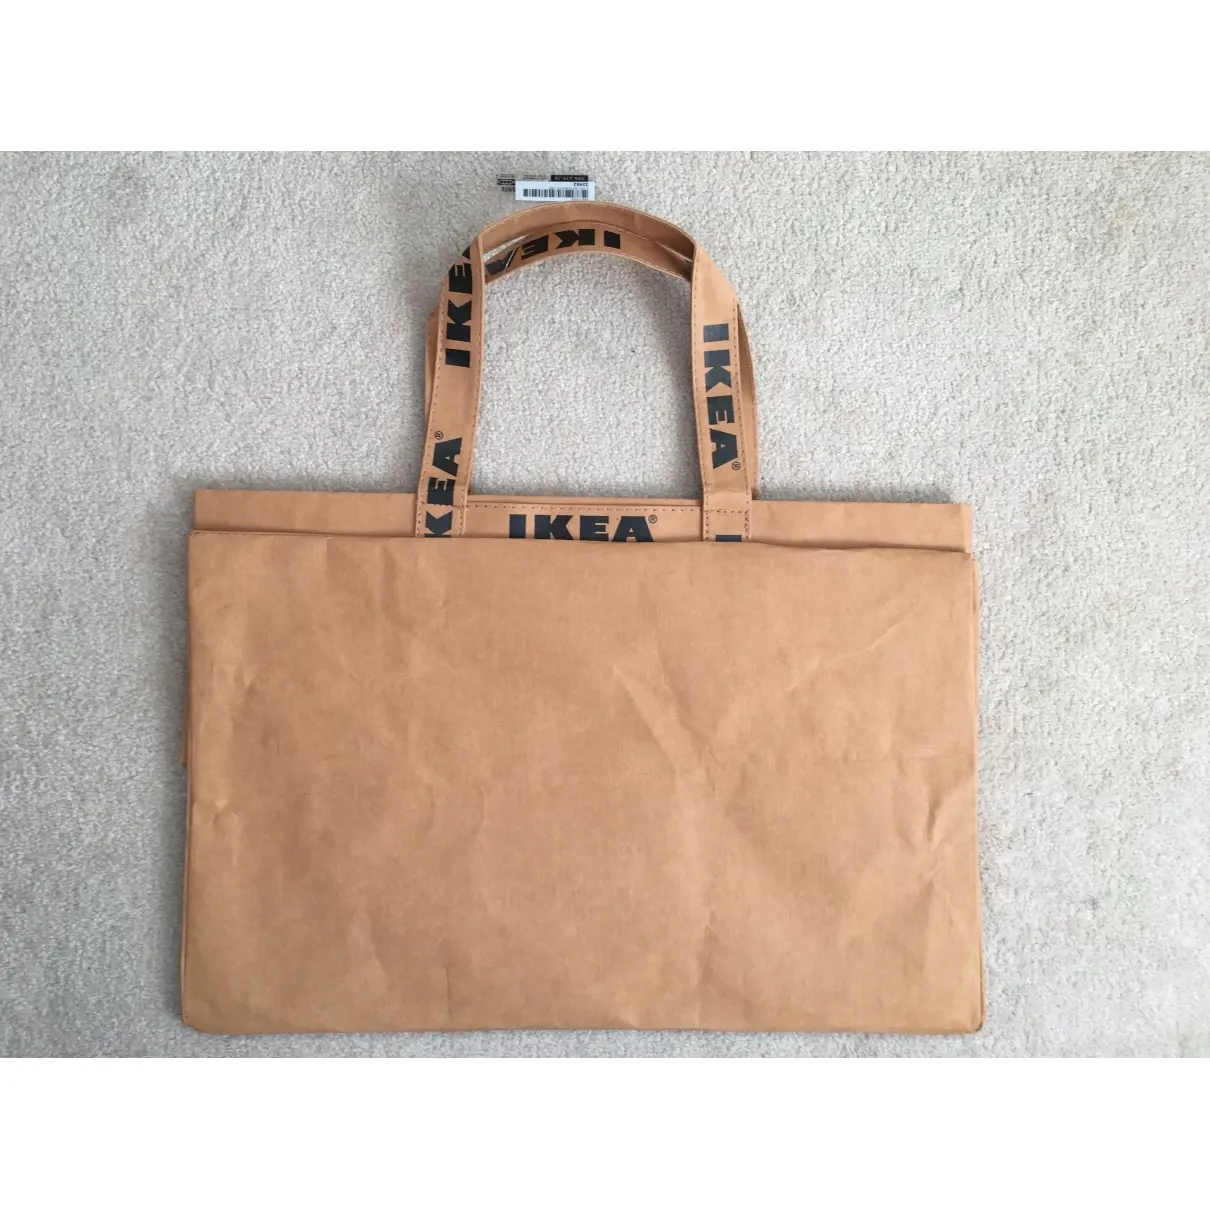 Virgil Abloh x Ikea Bag for sale